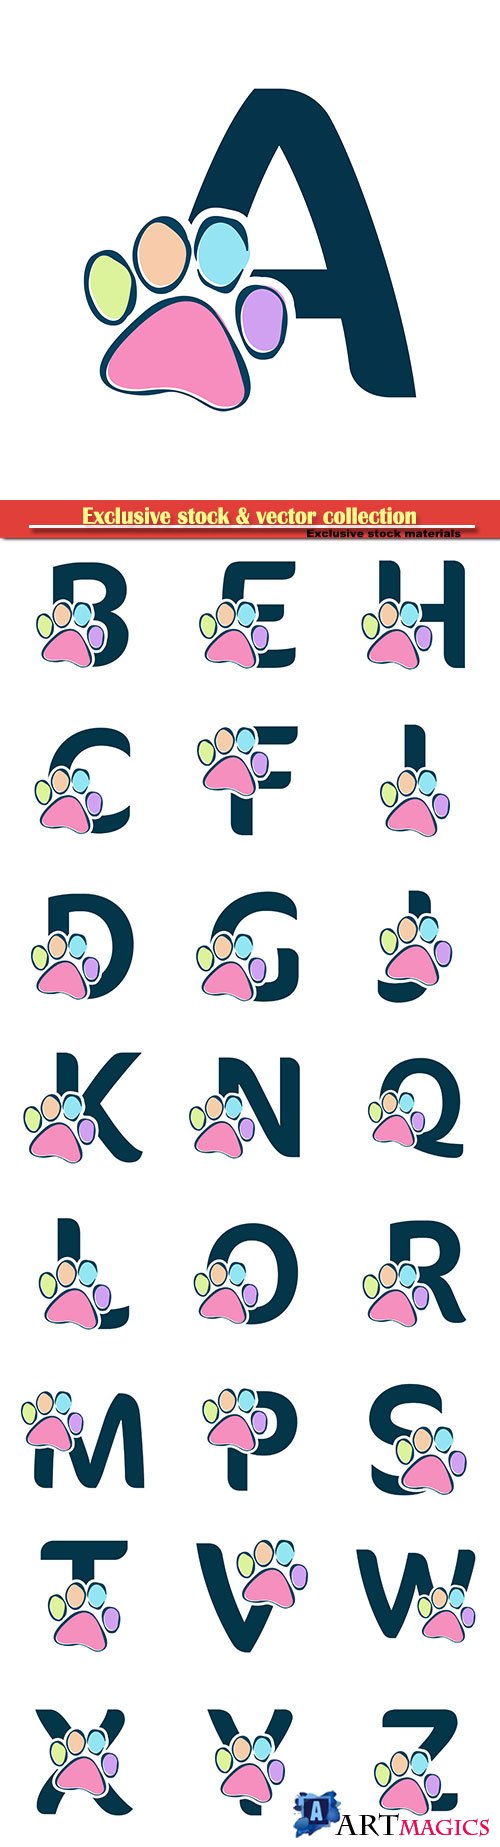 Paws font vector alphabet illustration